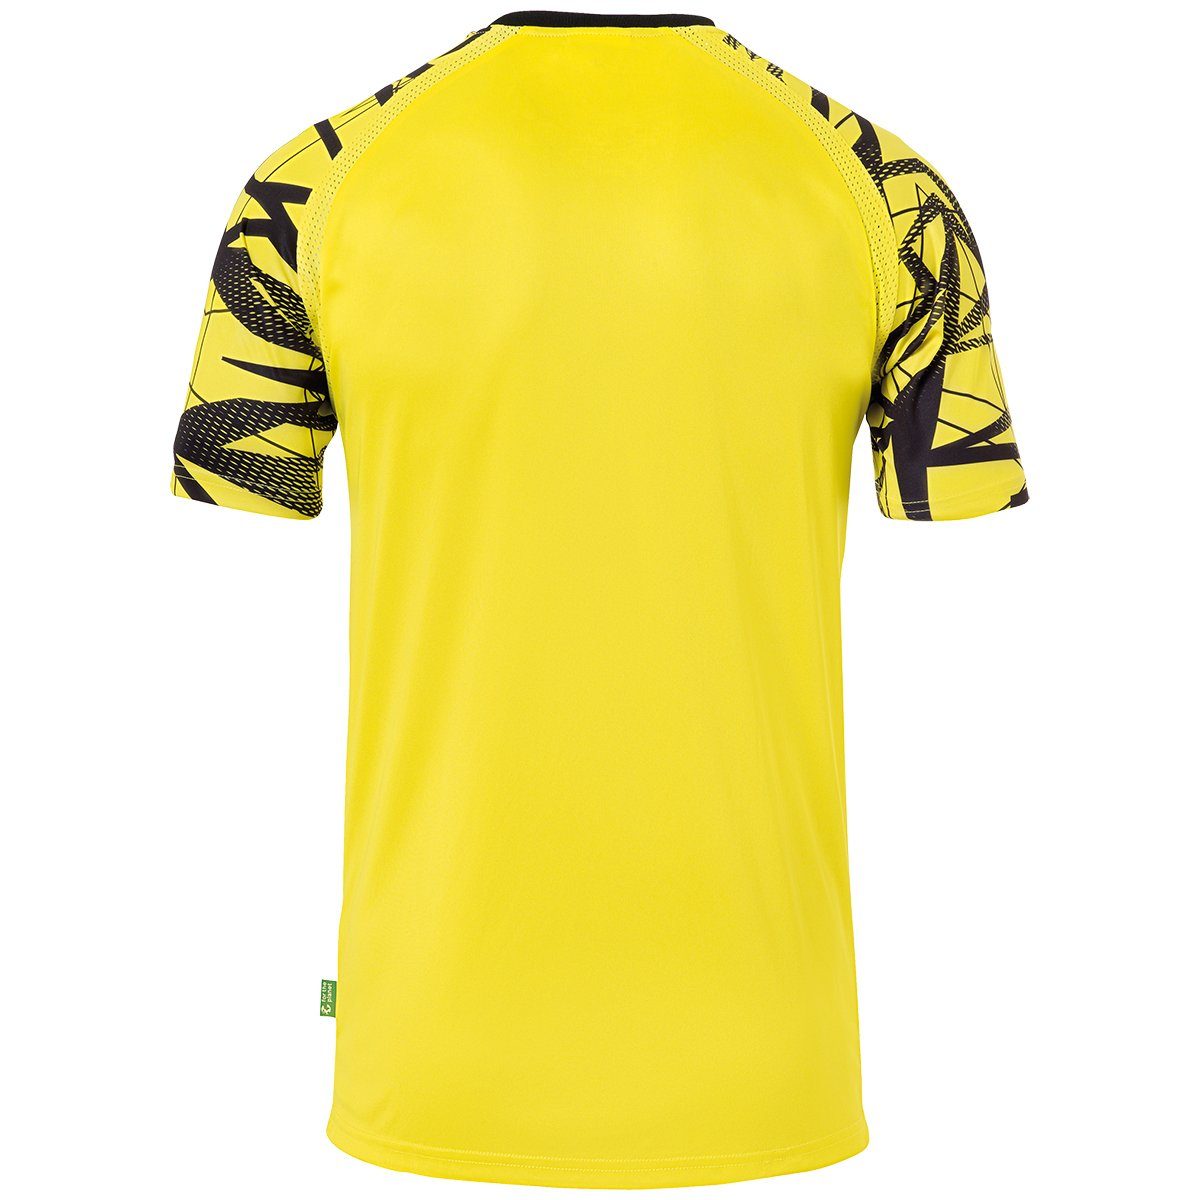 GOAL TRIKOT uhlsport KURZARM Trainings-T-Shirt 25 Trainingsshirt atmungsaktiv limonengelb/schwarz uhlsport